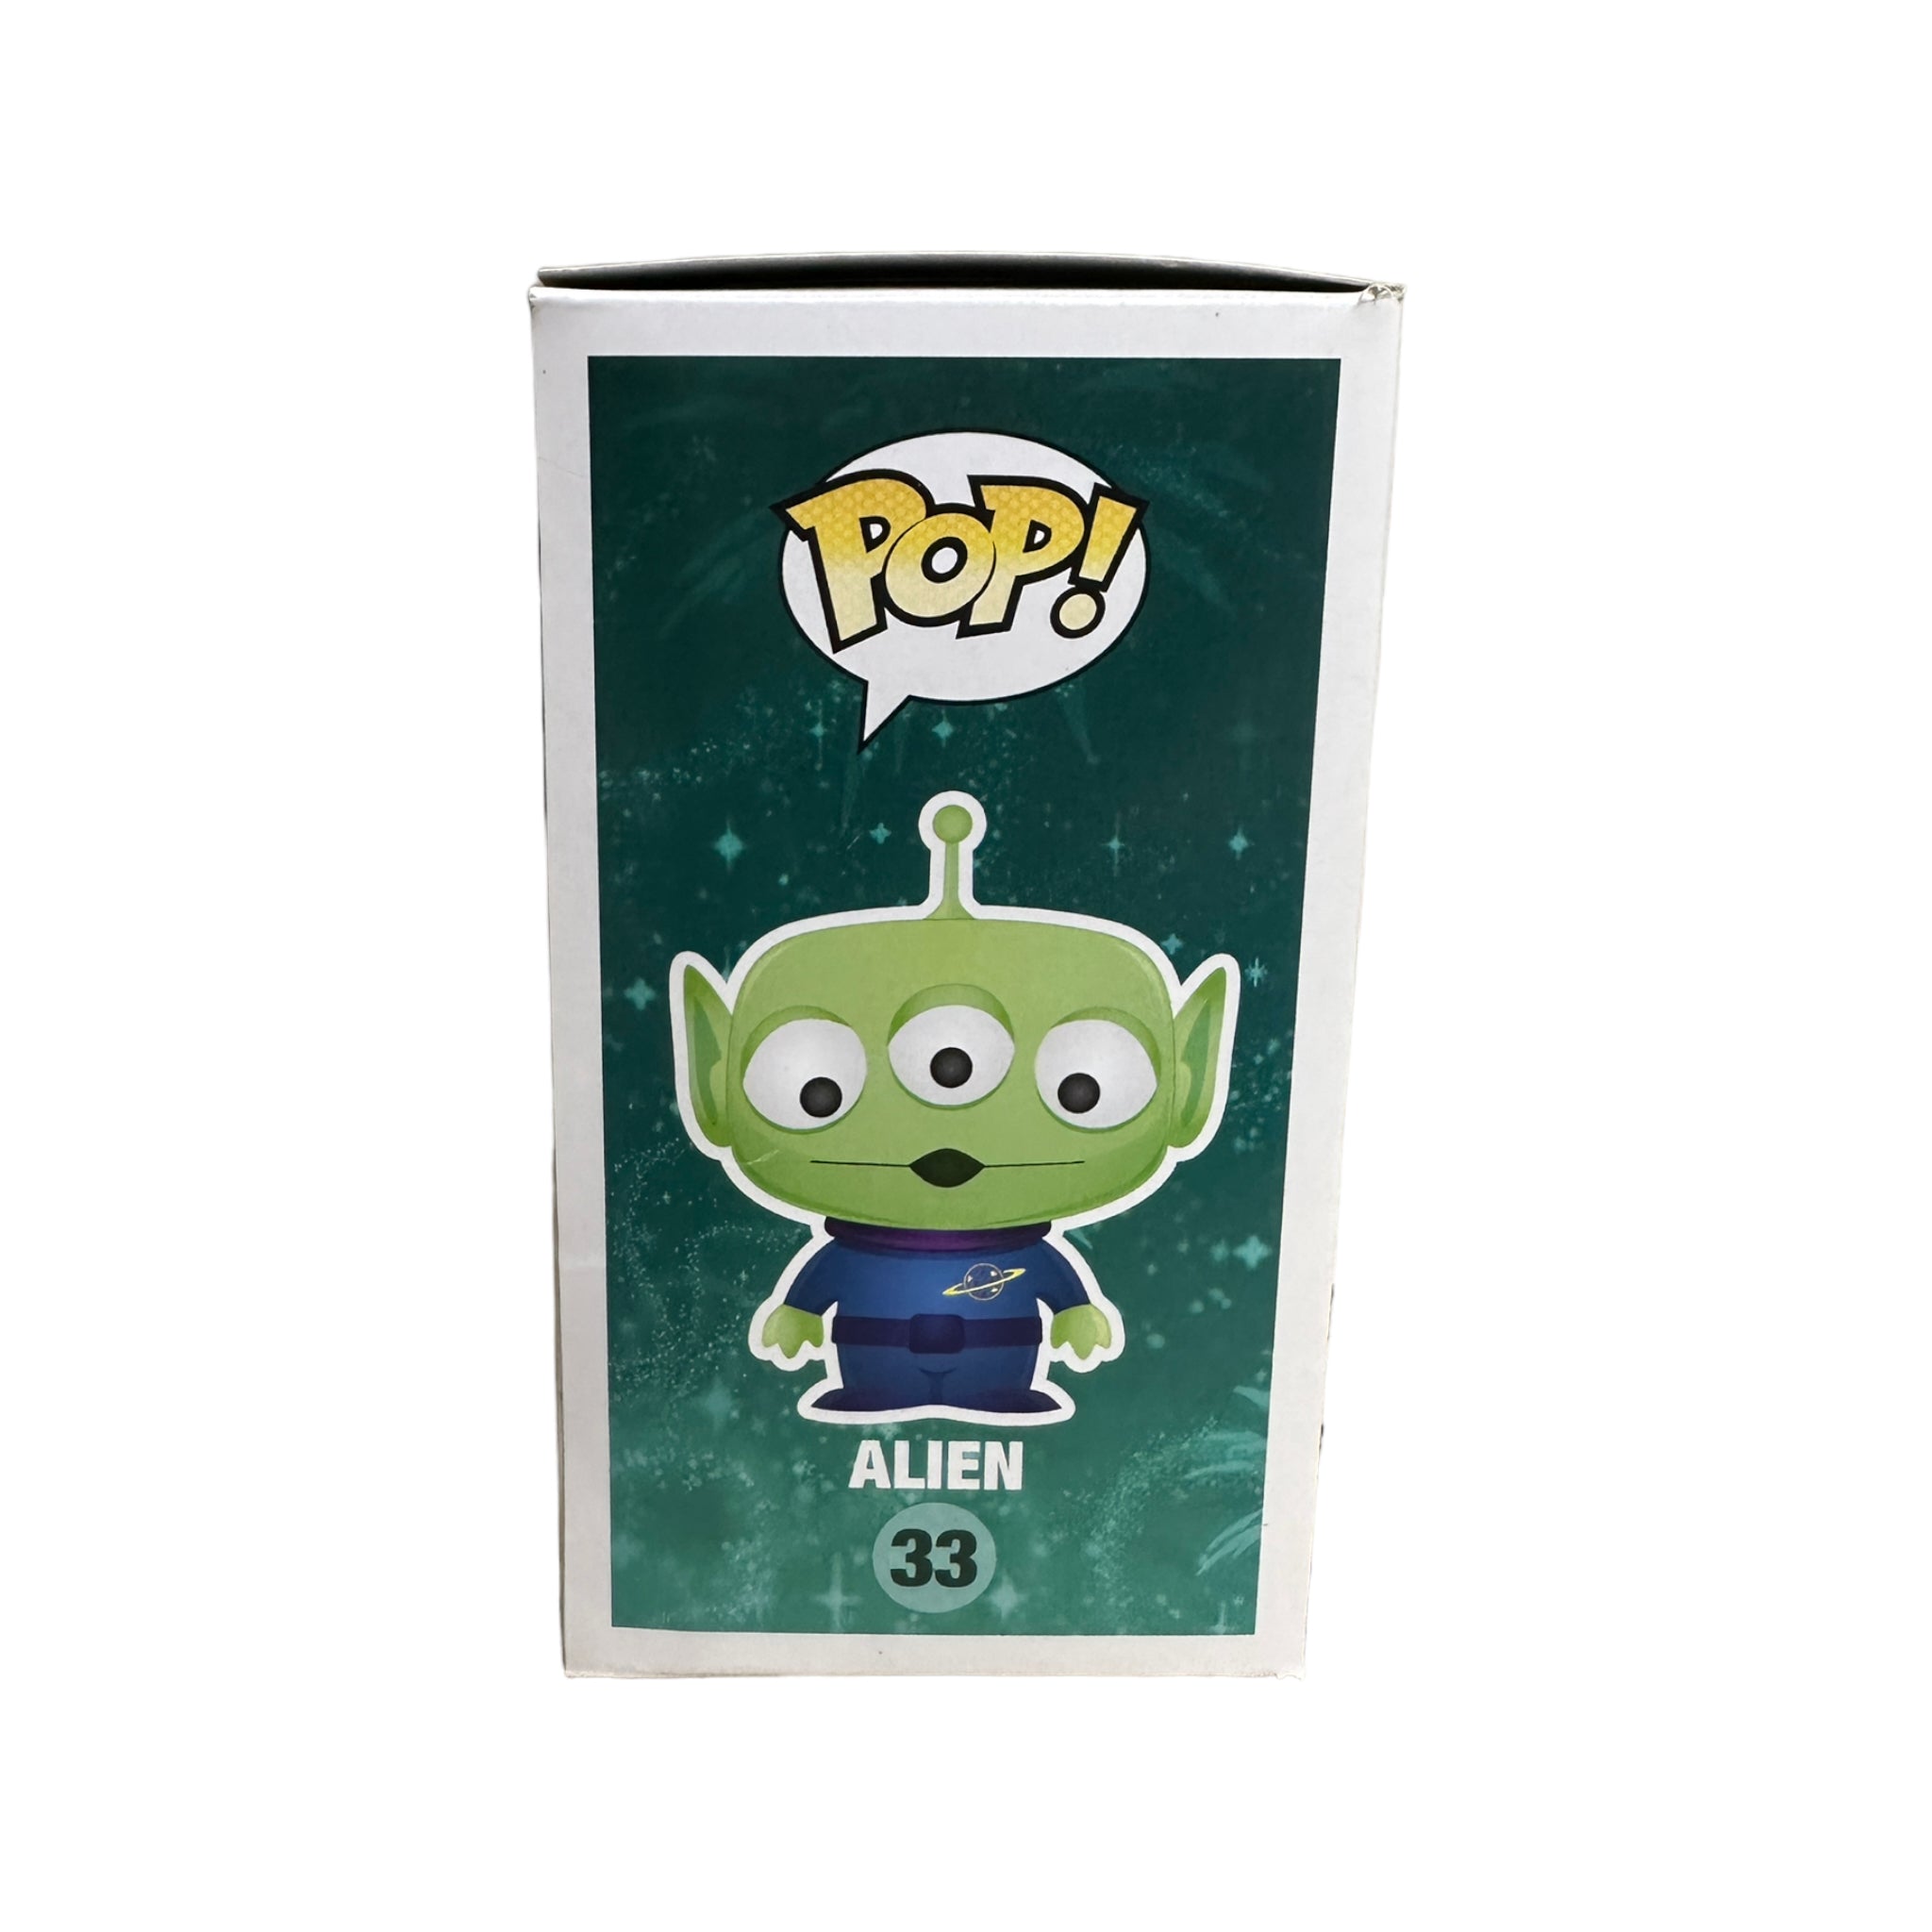 Alien #33 (Disney Store Logo) Funko Pop! - Disney Series 3 - 2011 Pop! - Condition 7.5/10